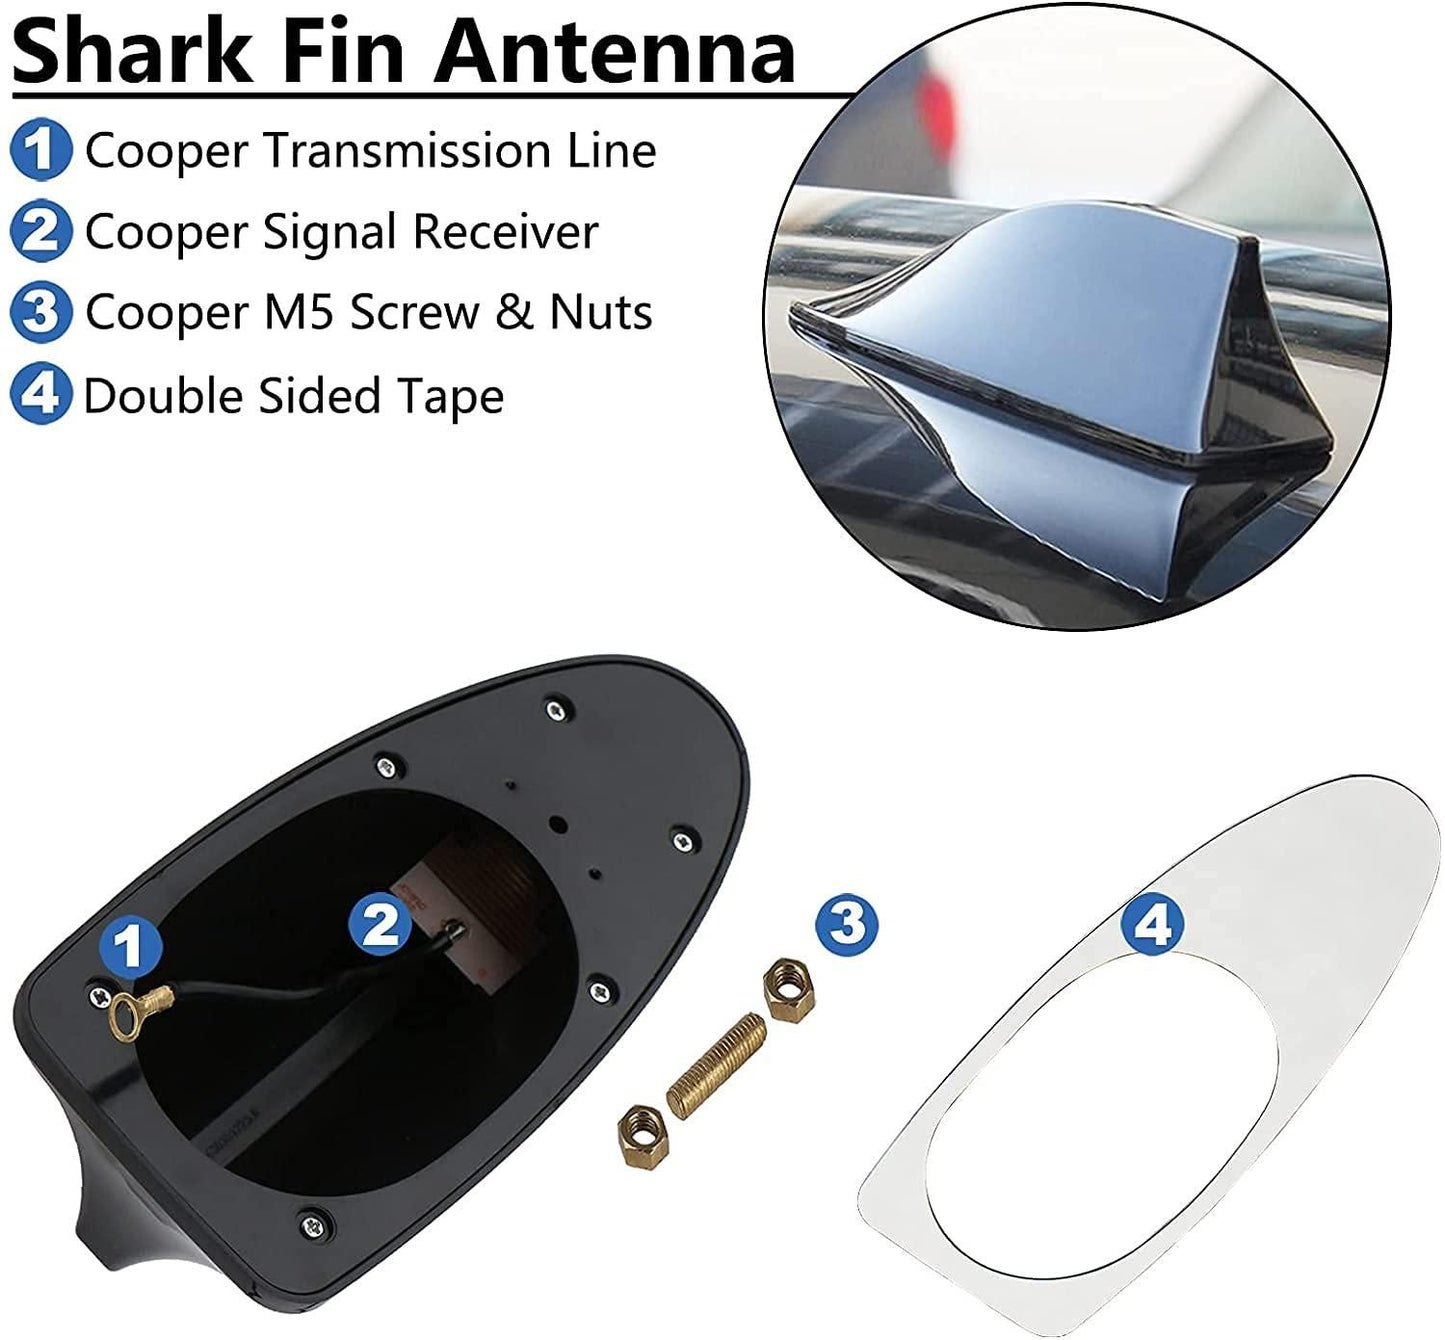 Universal Car Antenna, Shark Fin Antenna Roof Aerial Base AM FM Radio Signal